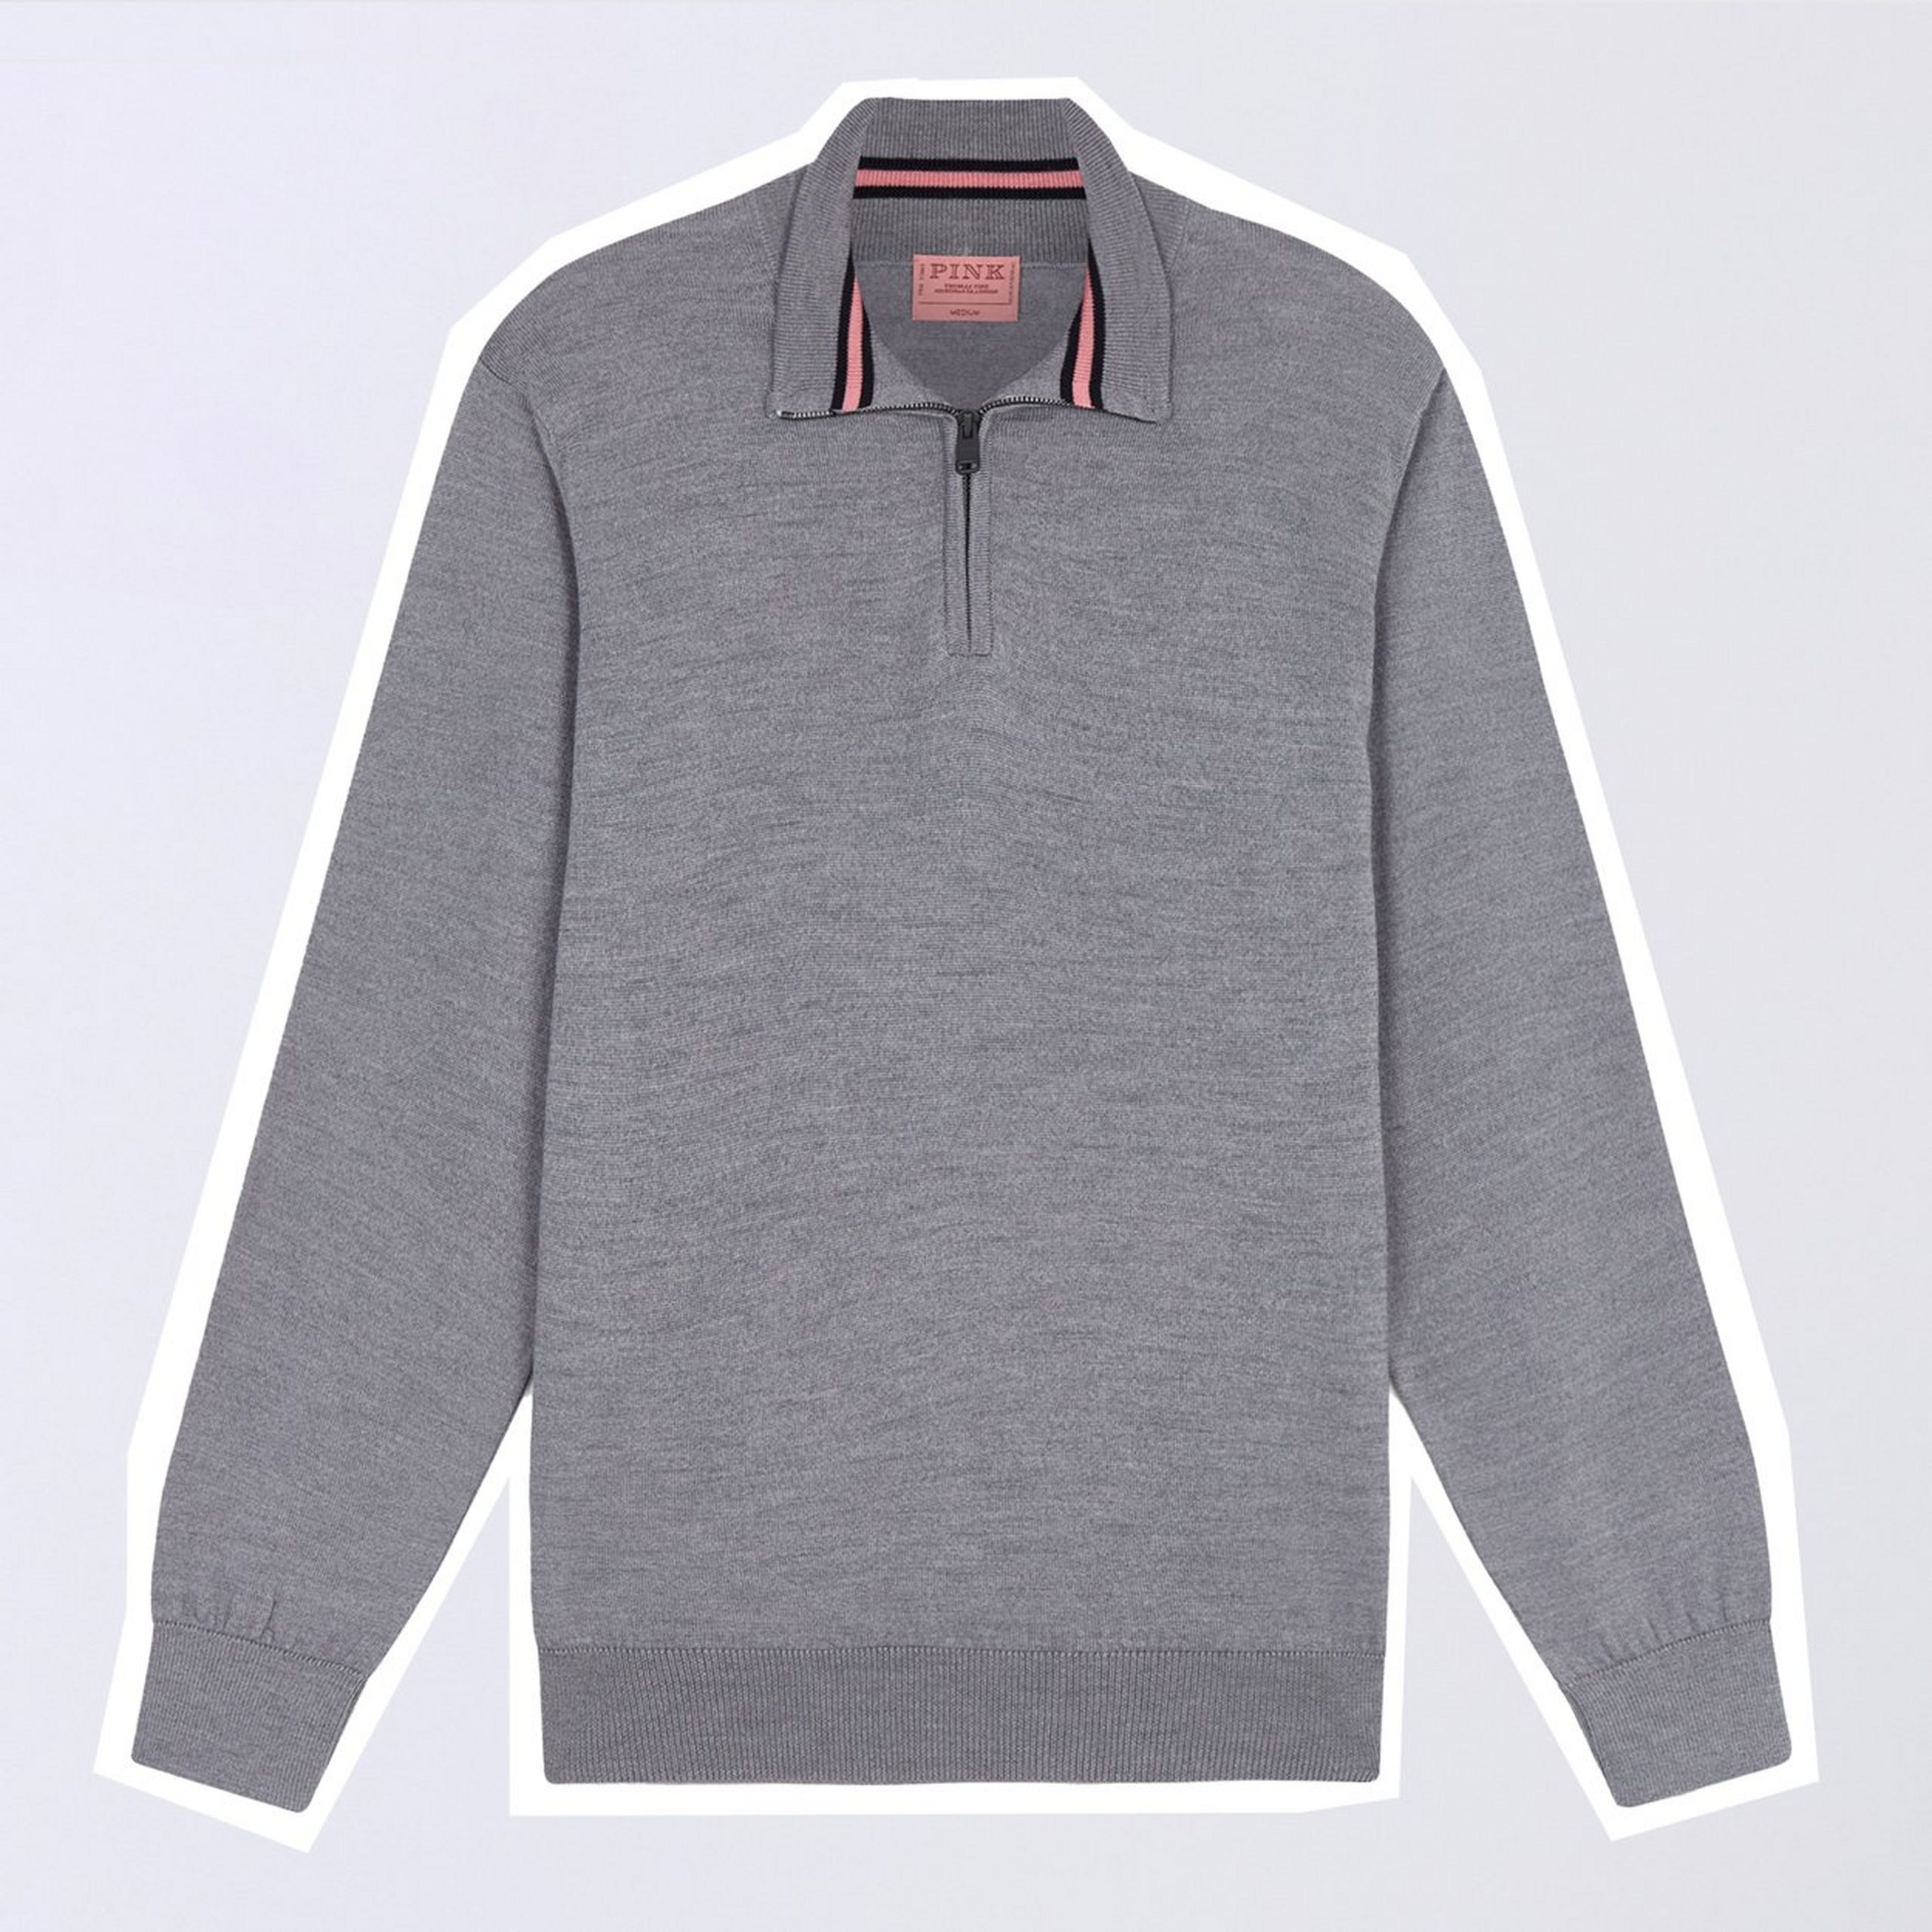 Pale Grey Merino Wool Zip Neck Sweater, £165